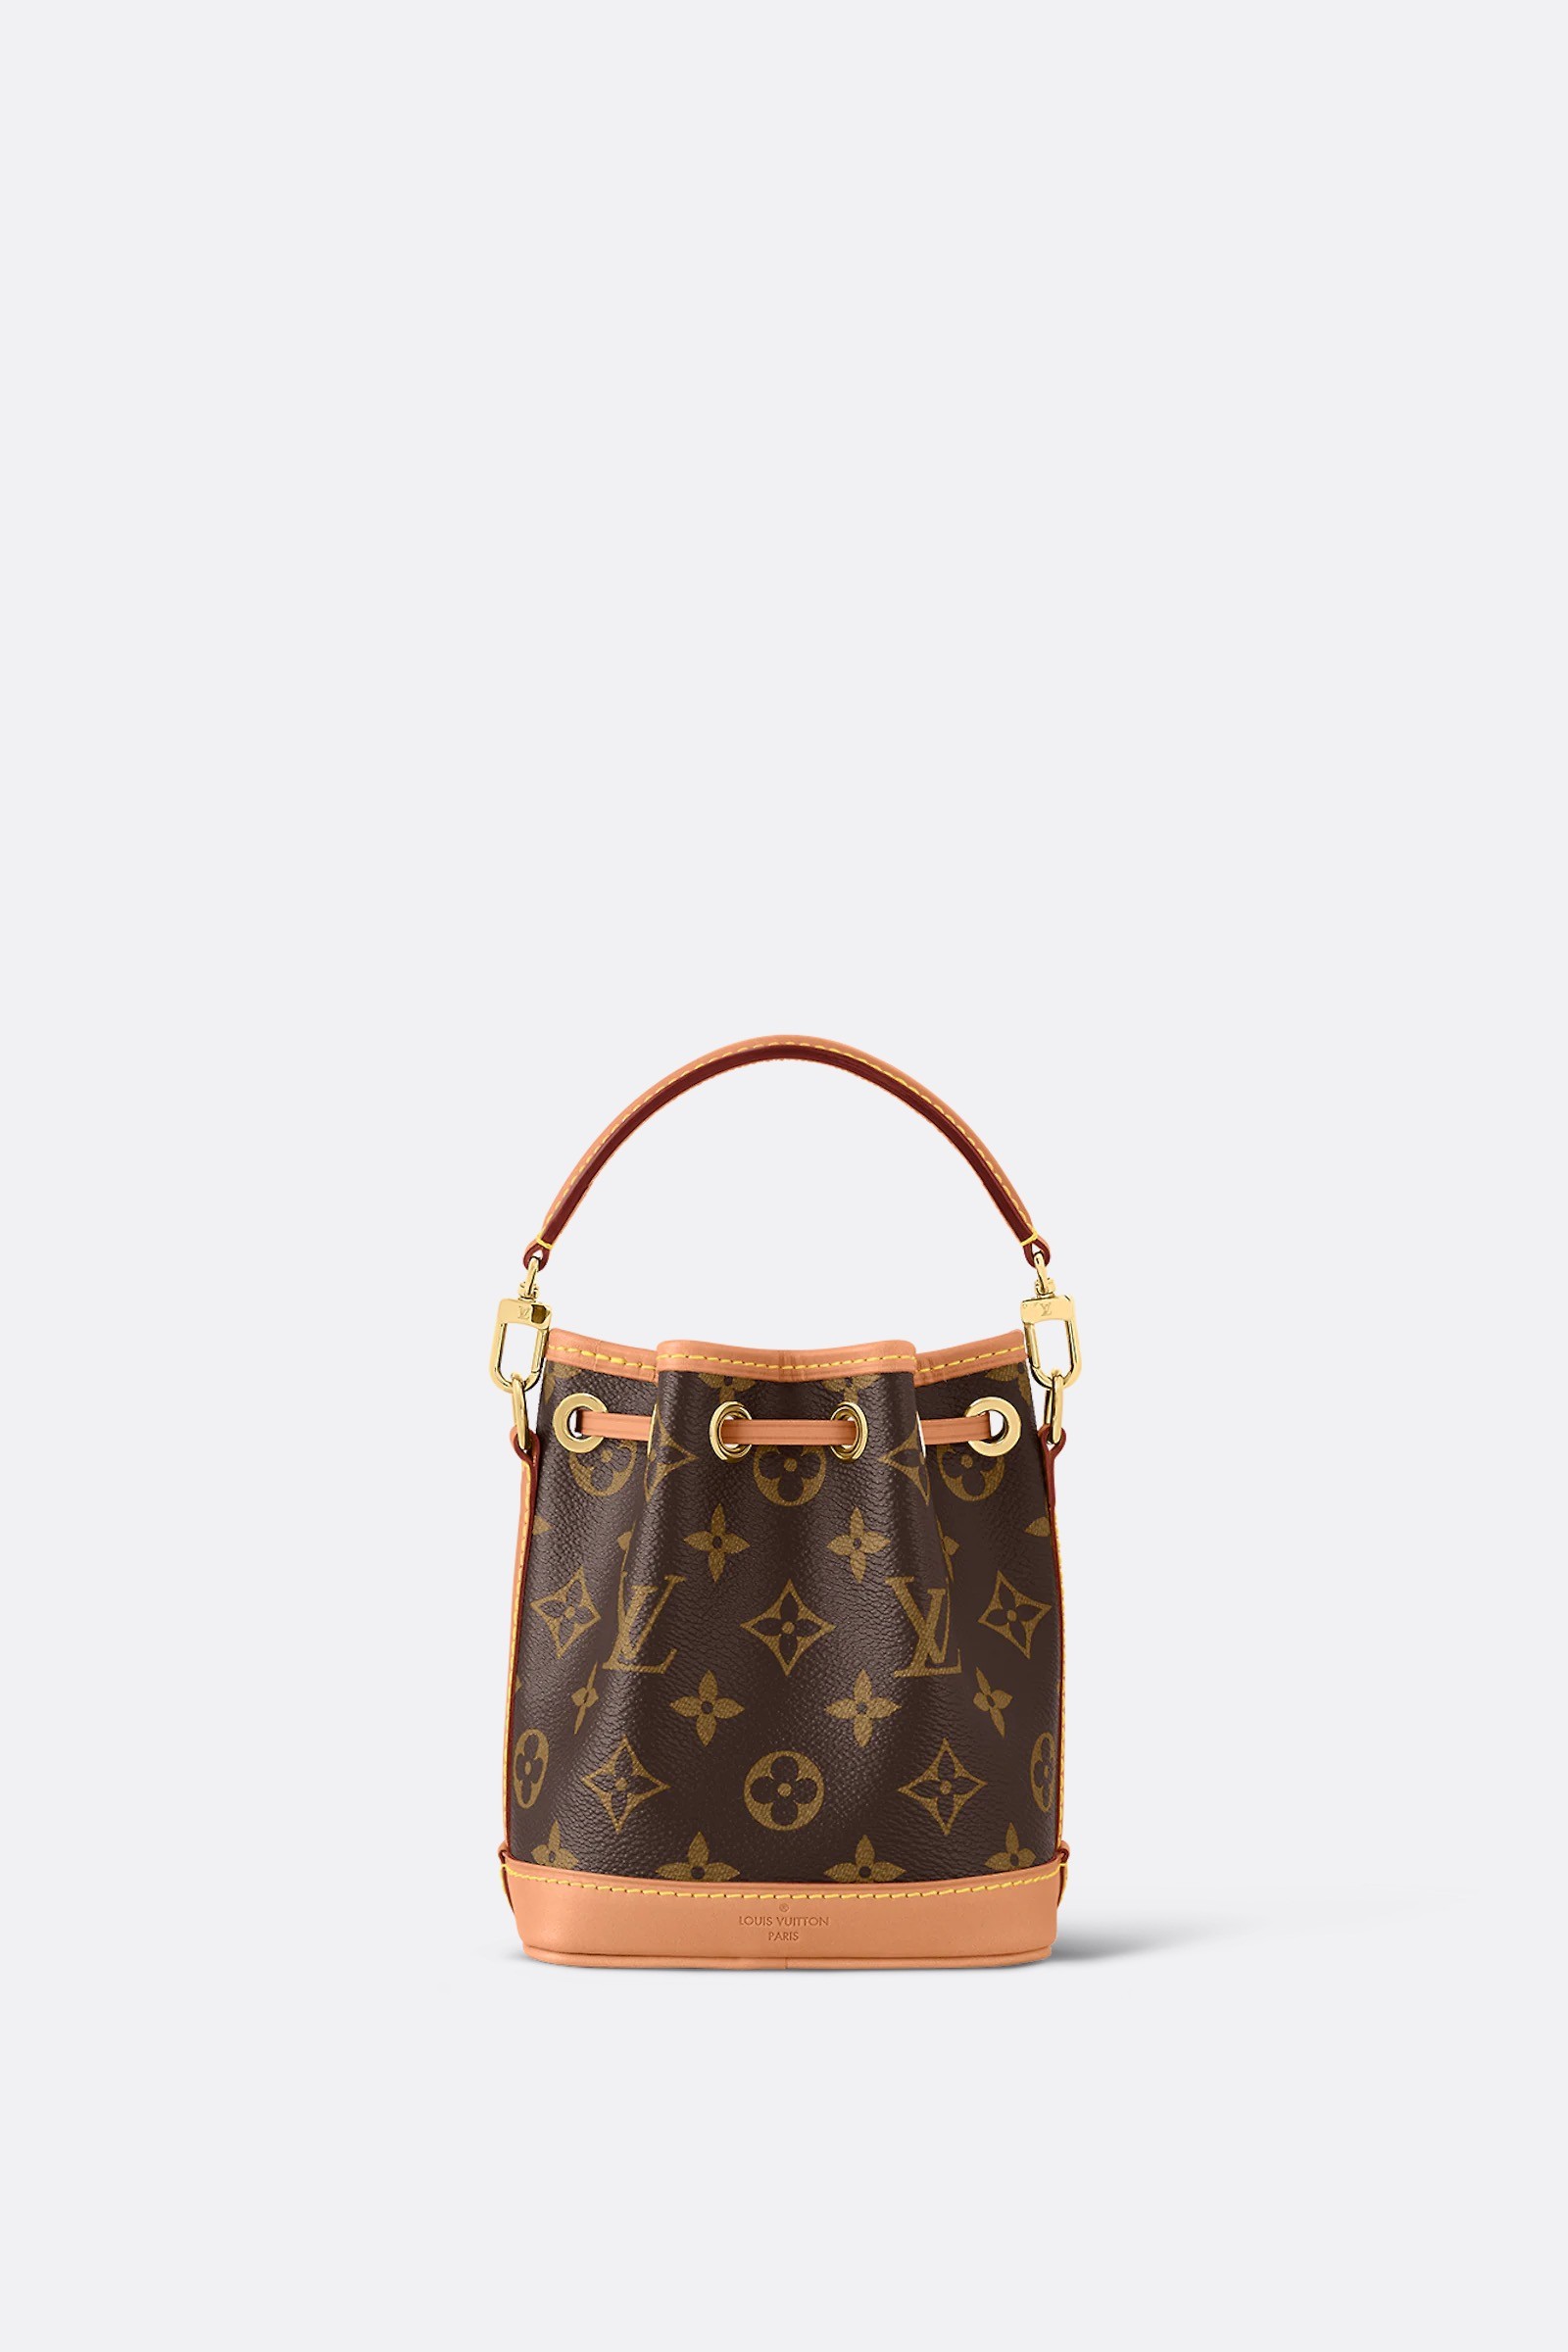 Louis Vuitton Nano bag